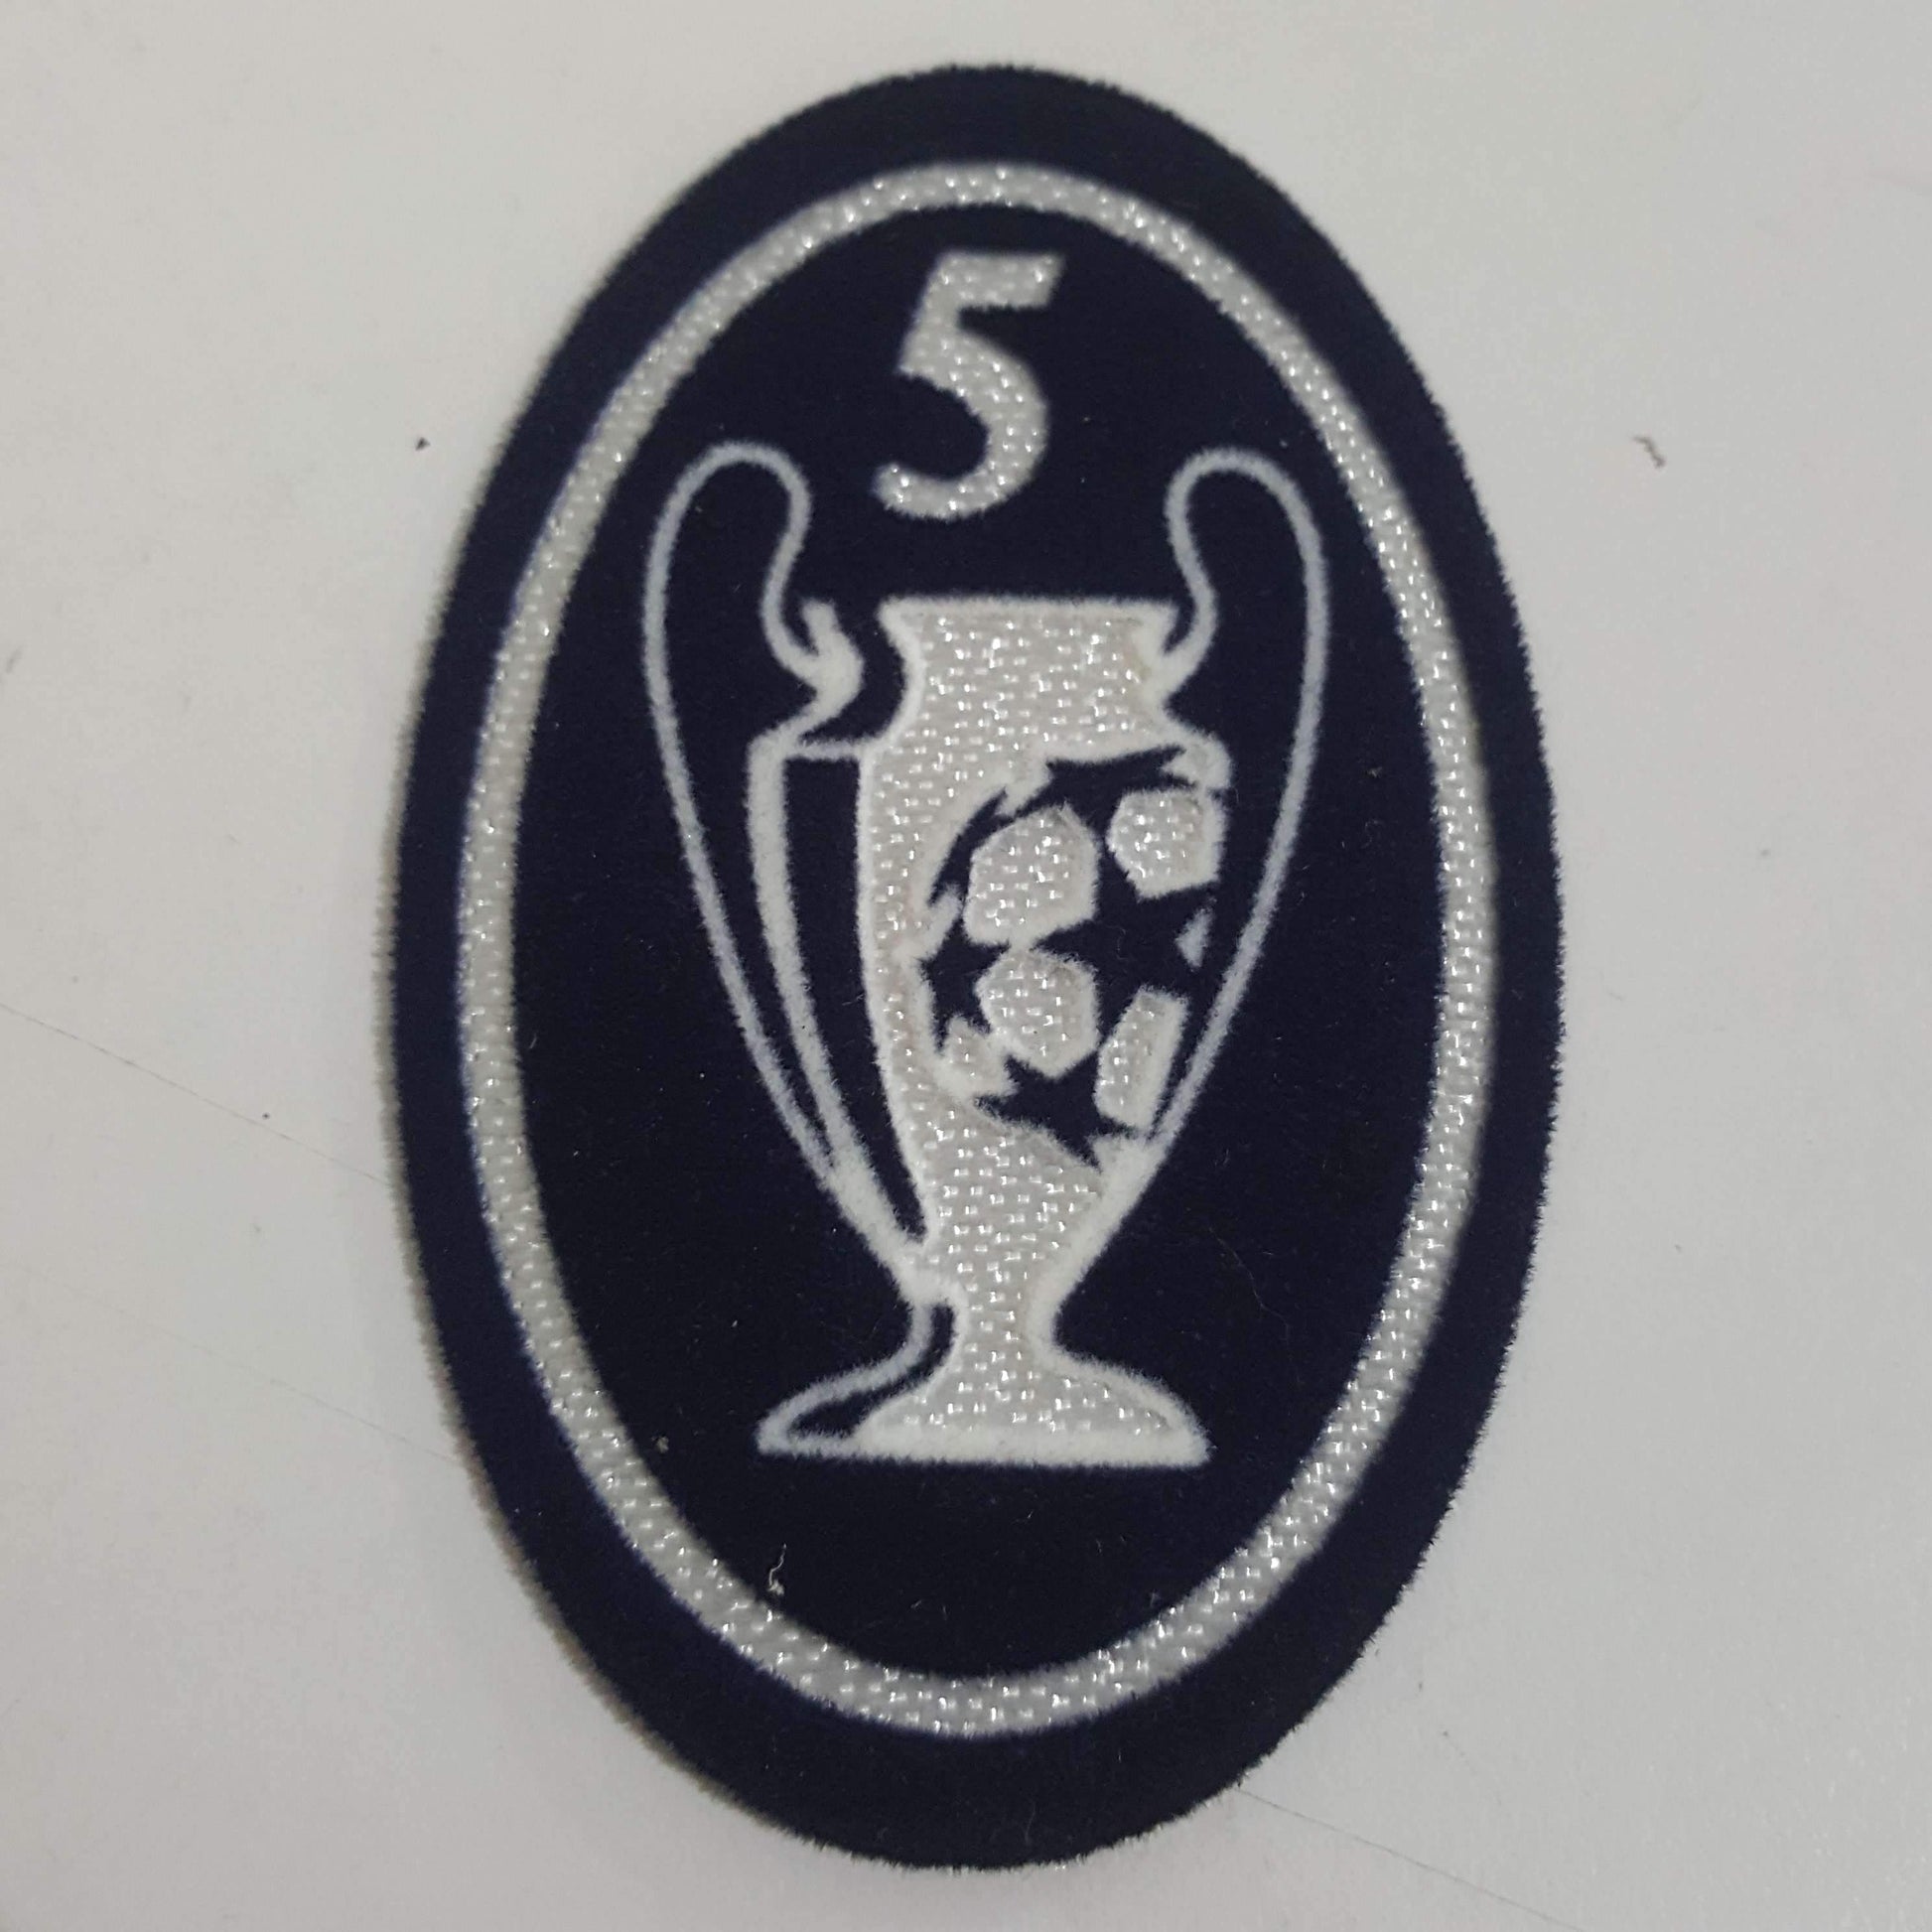 UEFA Badge Of Honour 5 Times Champions League Winner Patch - ClassicFootballJersey